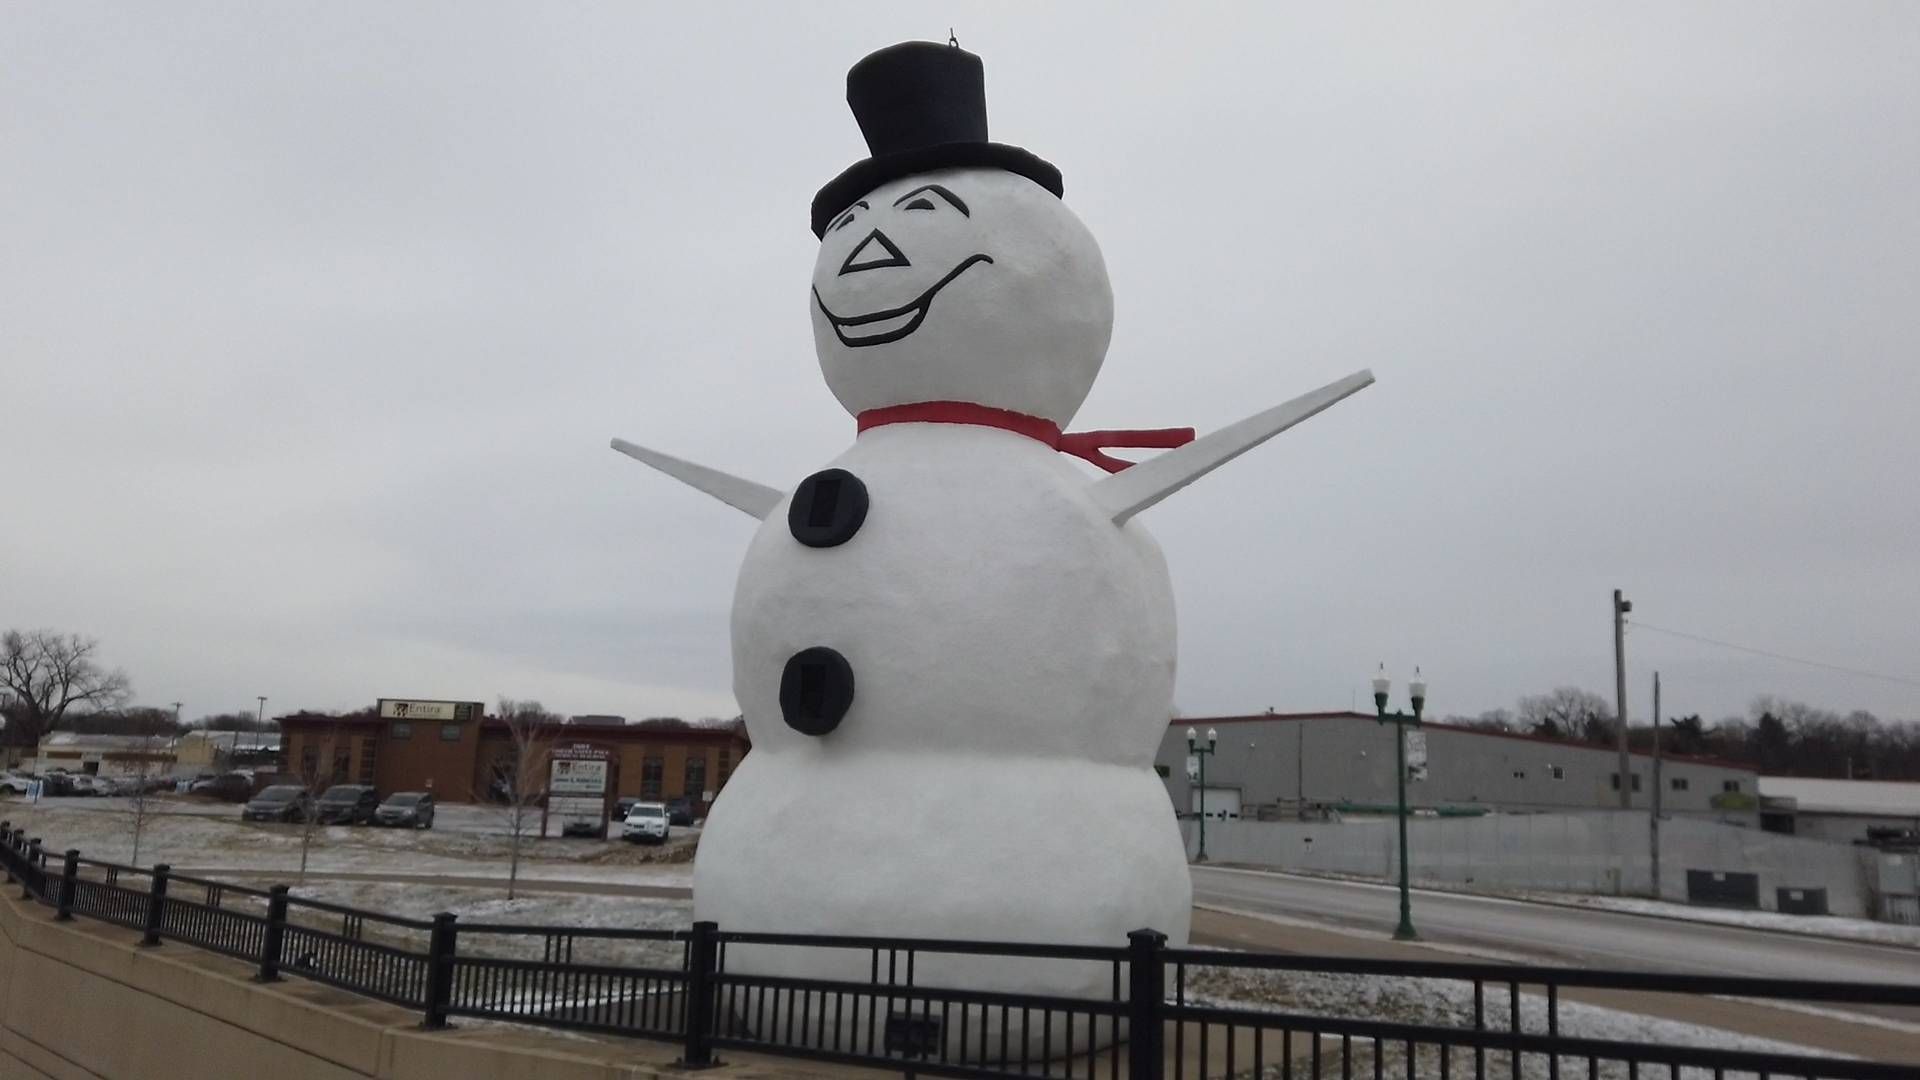 A 44 foot tall snowman